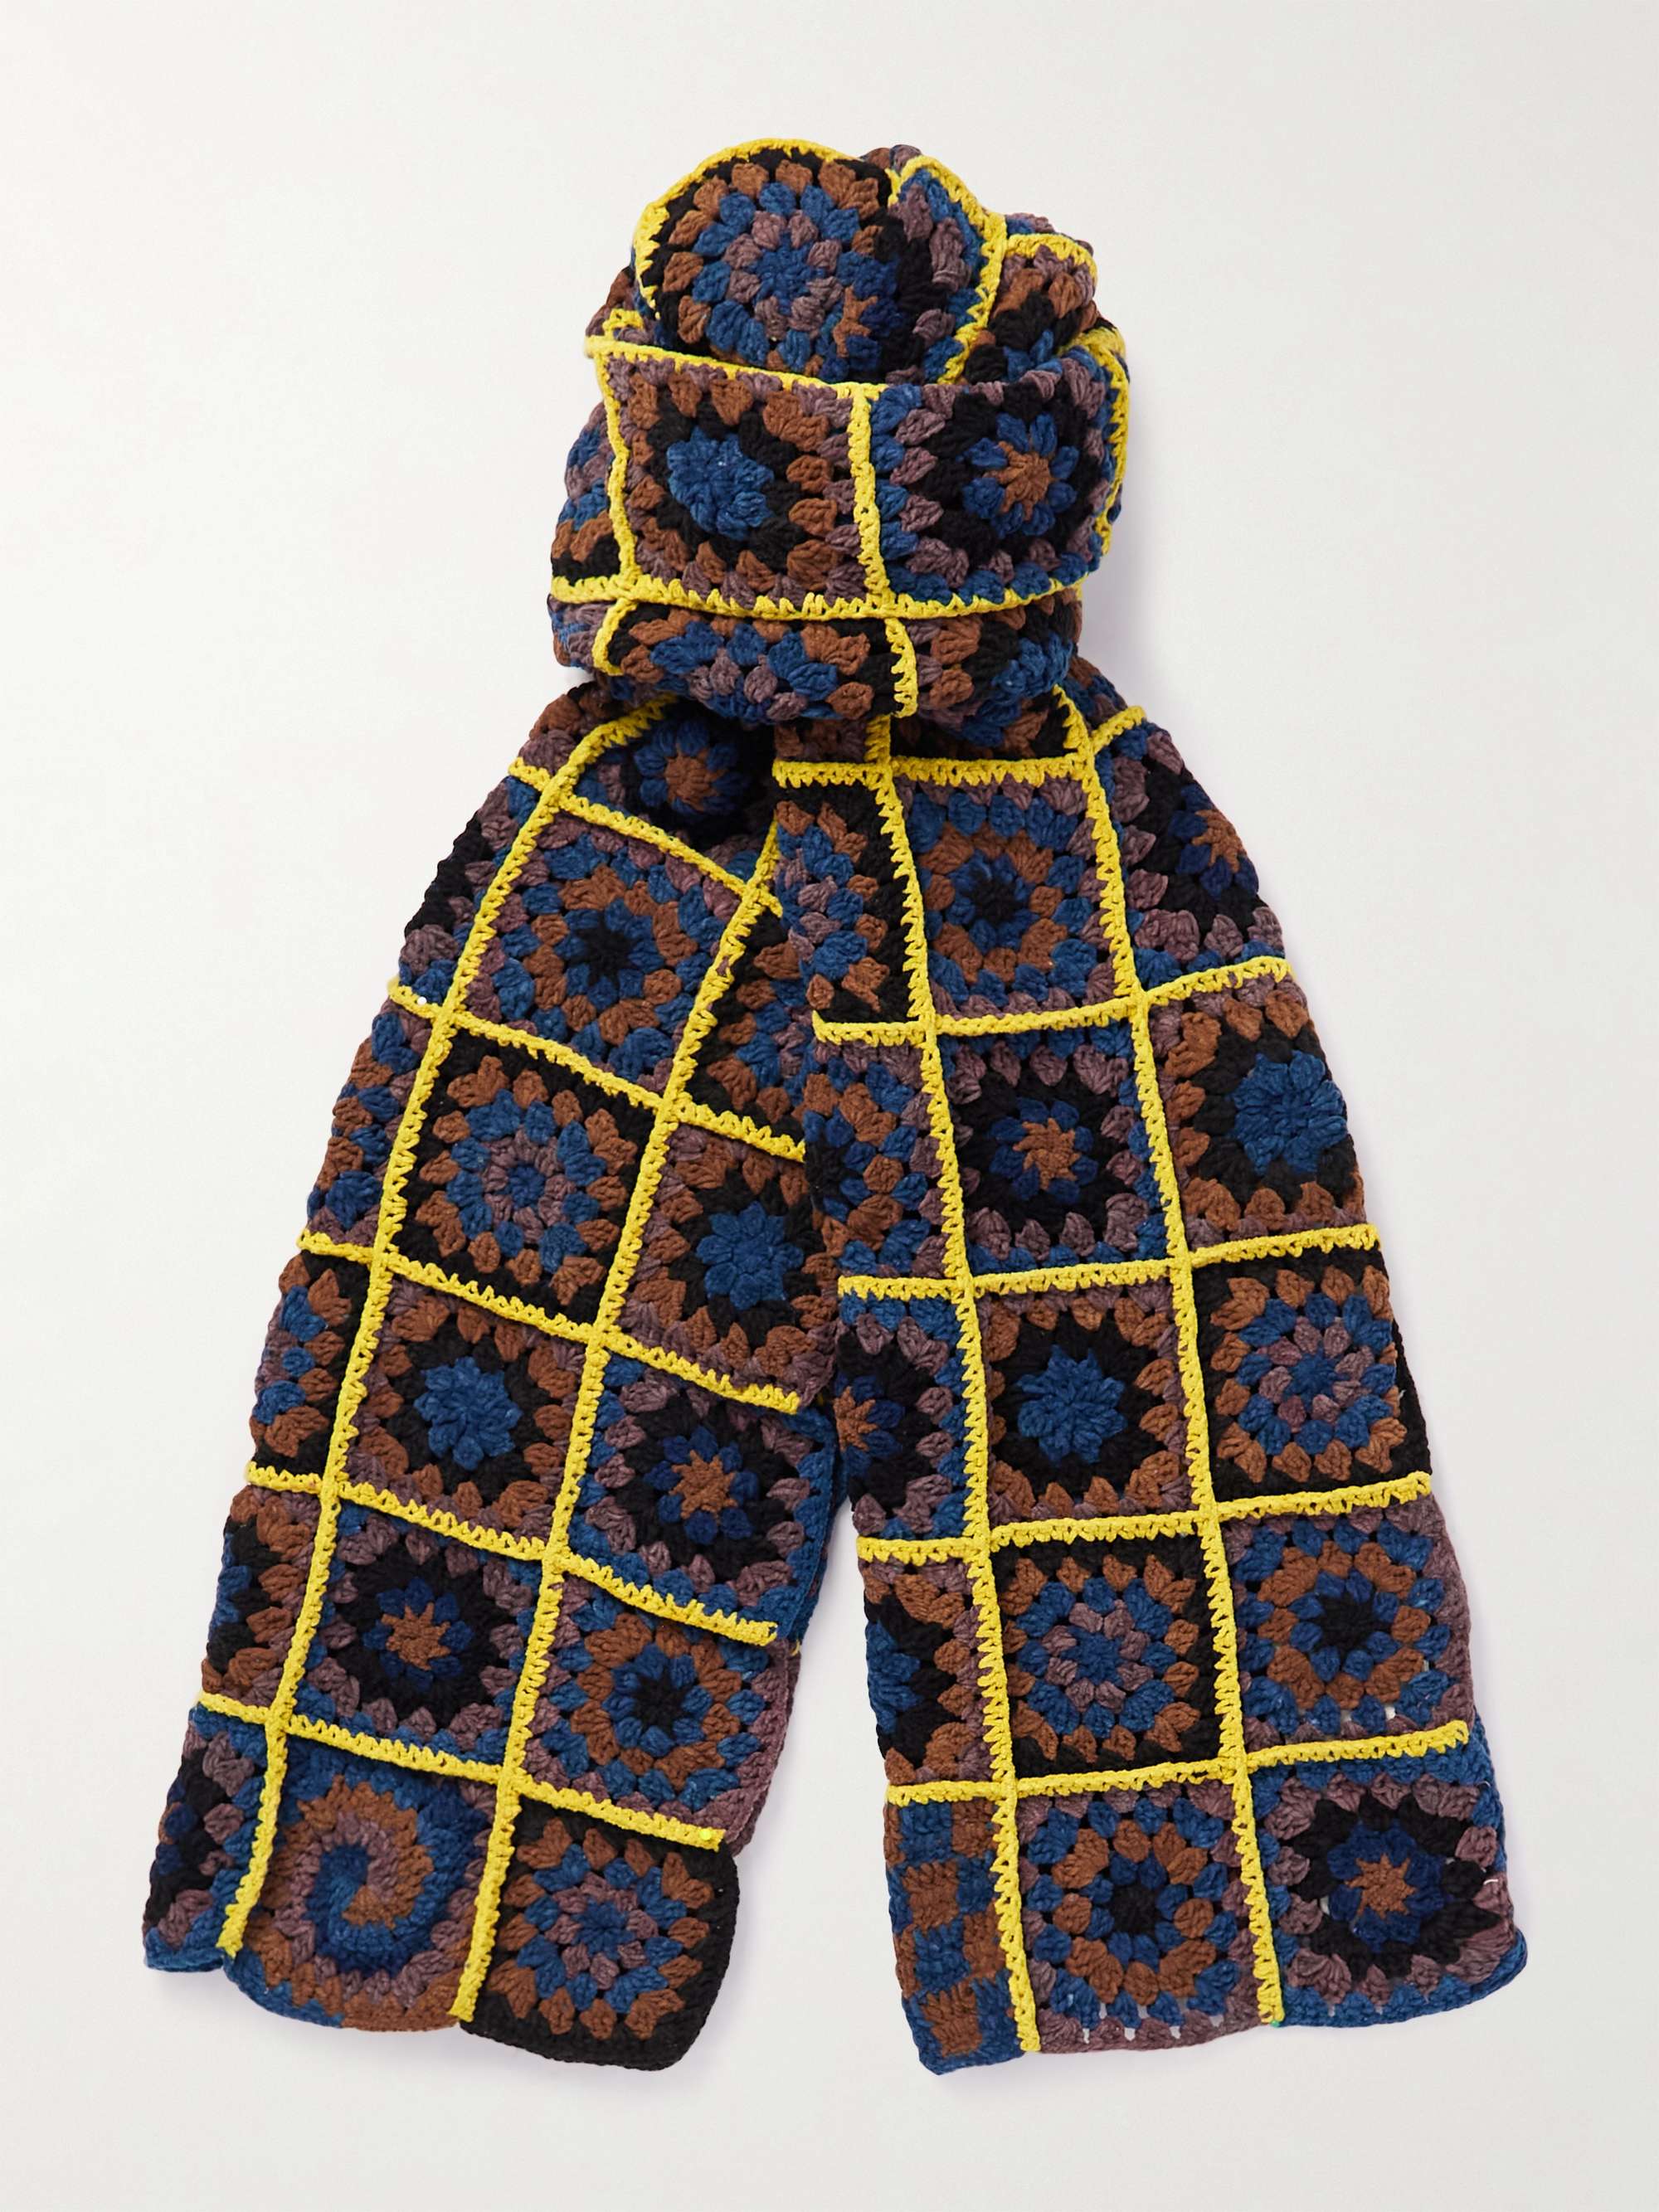 STORY MFG. Piece XL Patchwork Crocheted Cotton Scarf